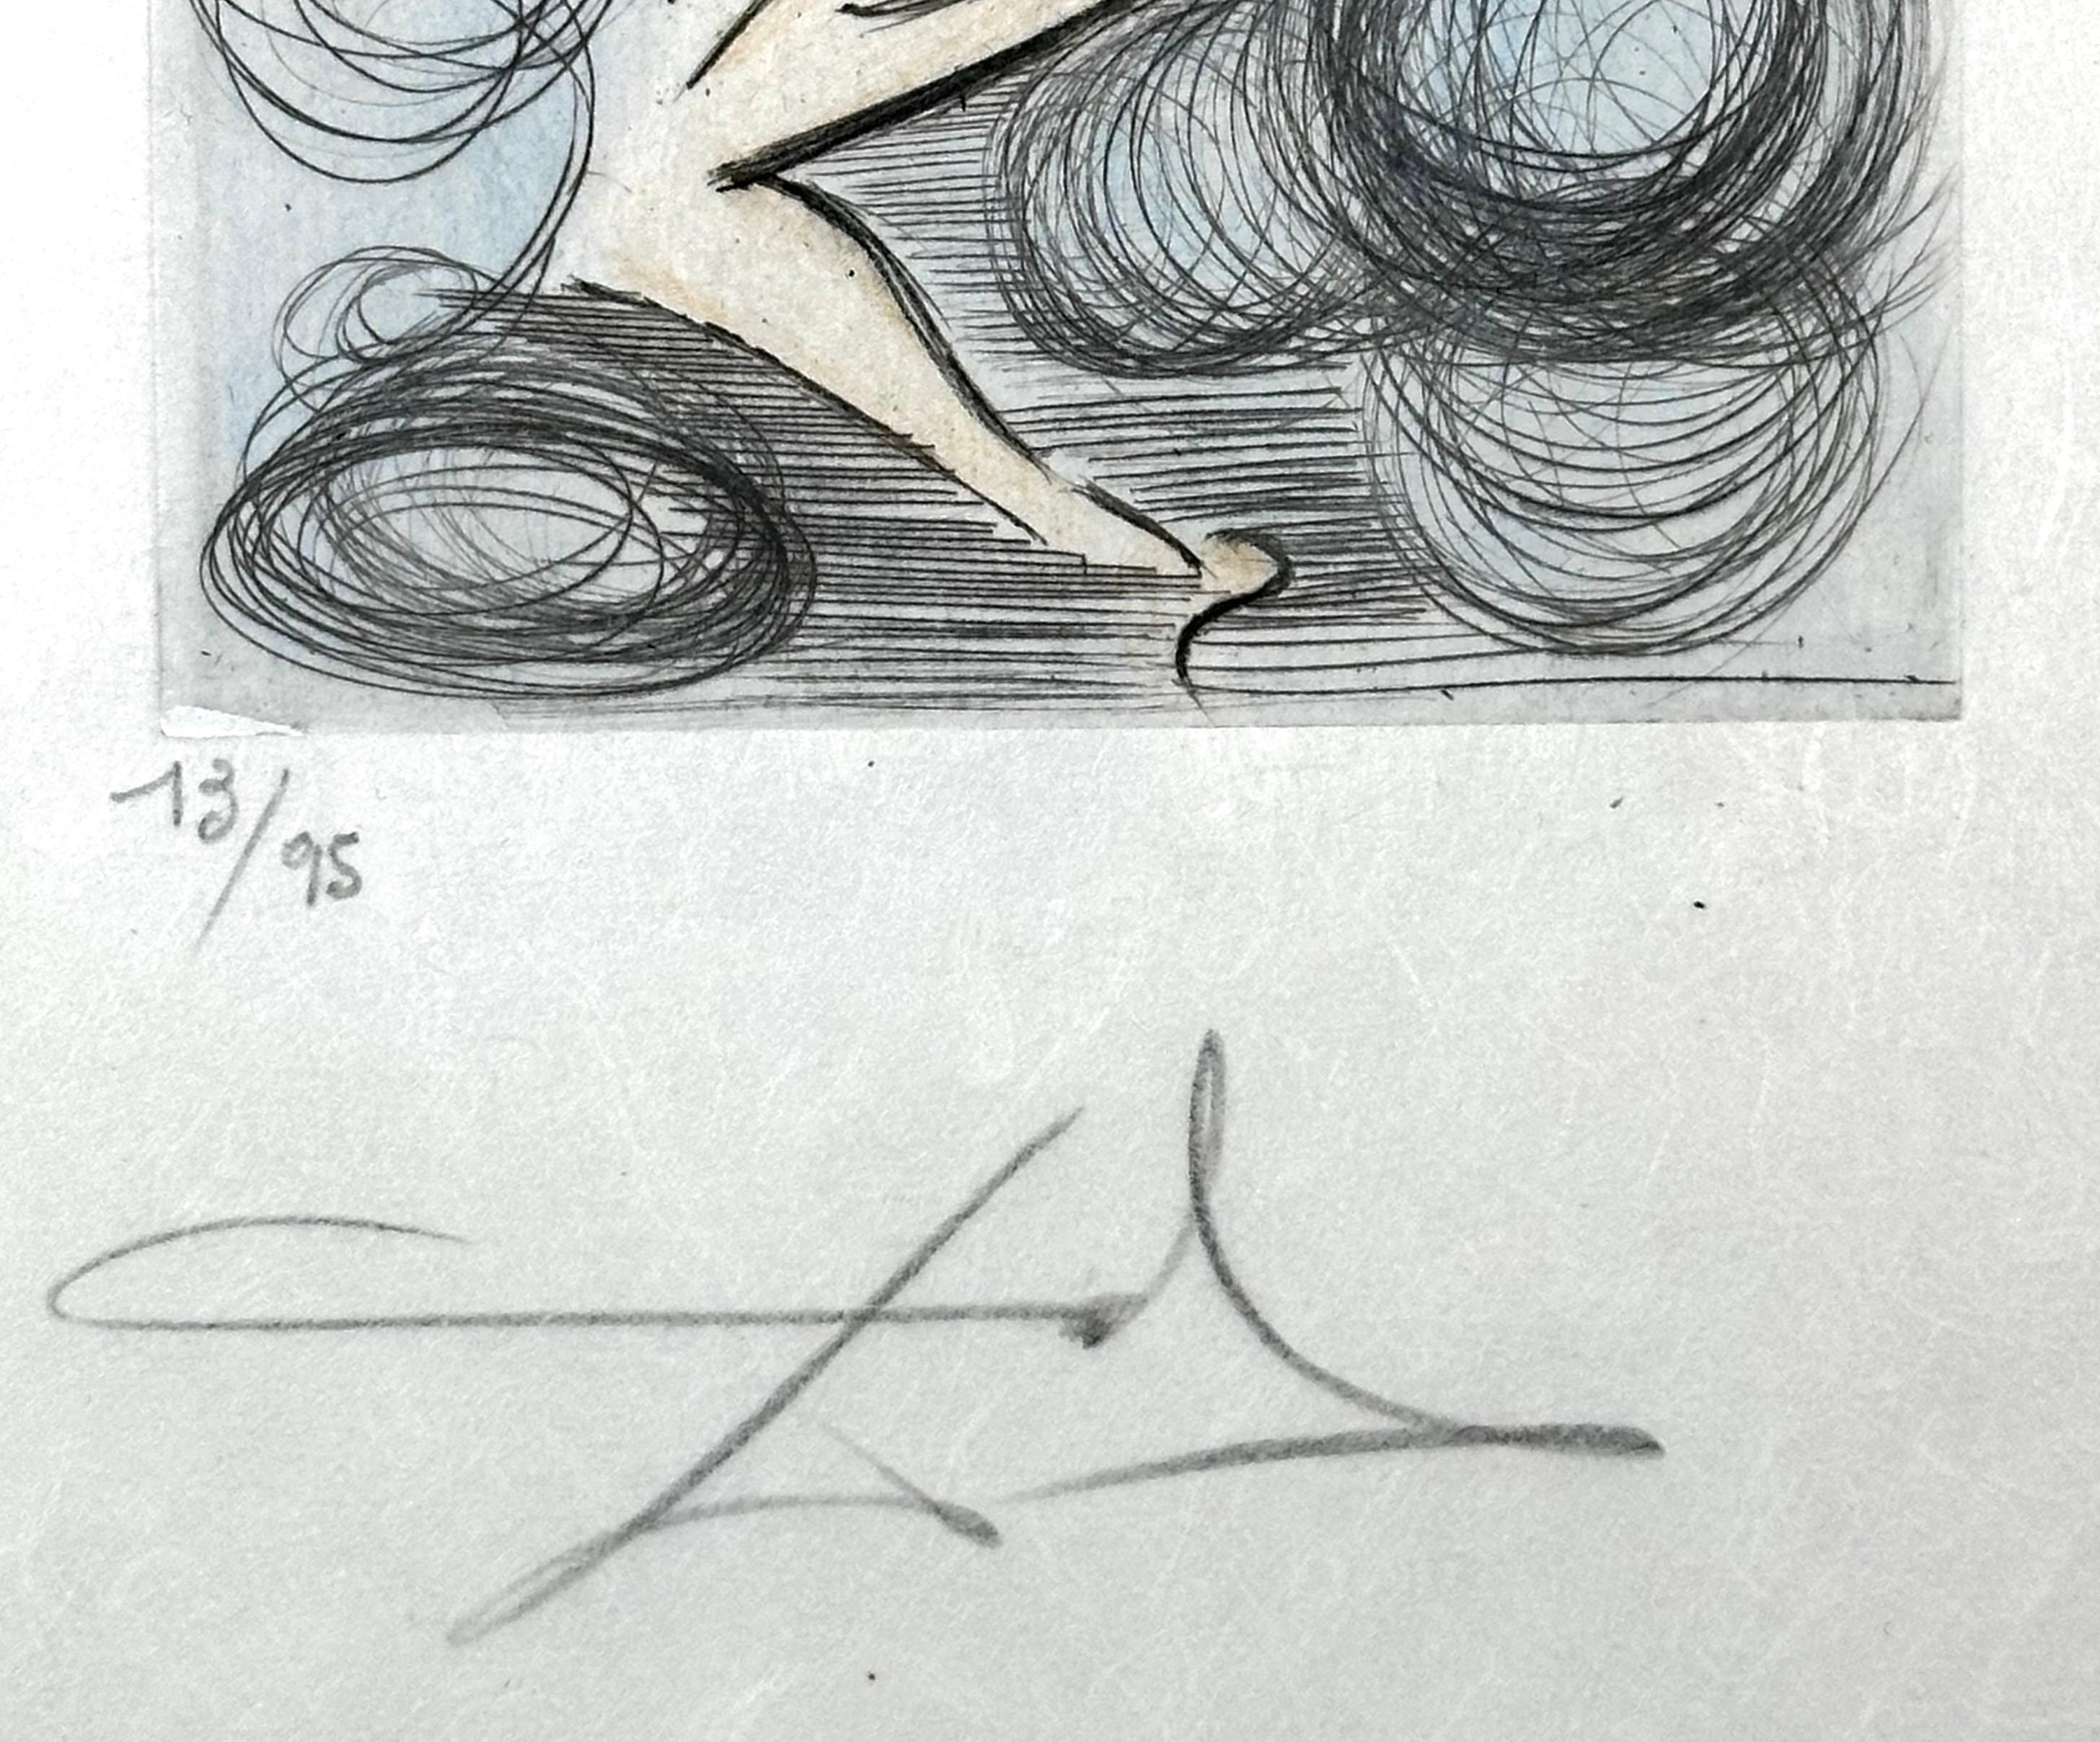 ARTIST: Salvador Dali

TITLE: Petites Nus (From Appollinaire) C

MEDIUM: Etching

SIGNED: Hand Signed 

PUBLISHER: Editions Argillet

EDITION NUMBER: 73/95

MEASUREMENTS: 15.2